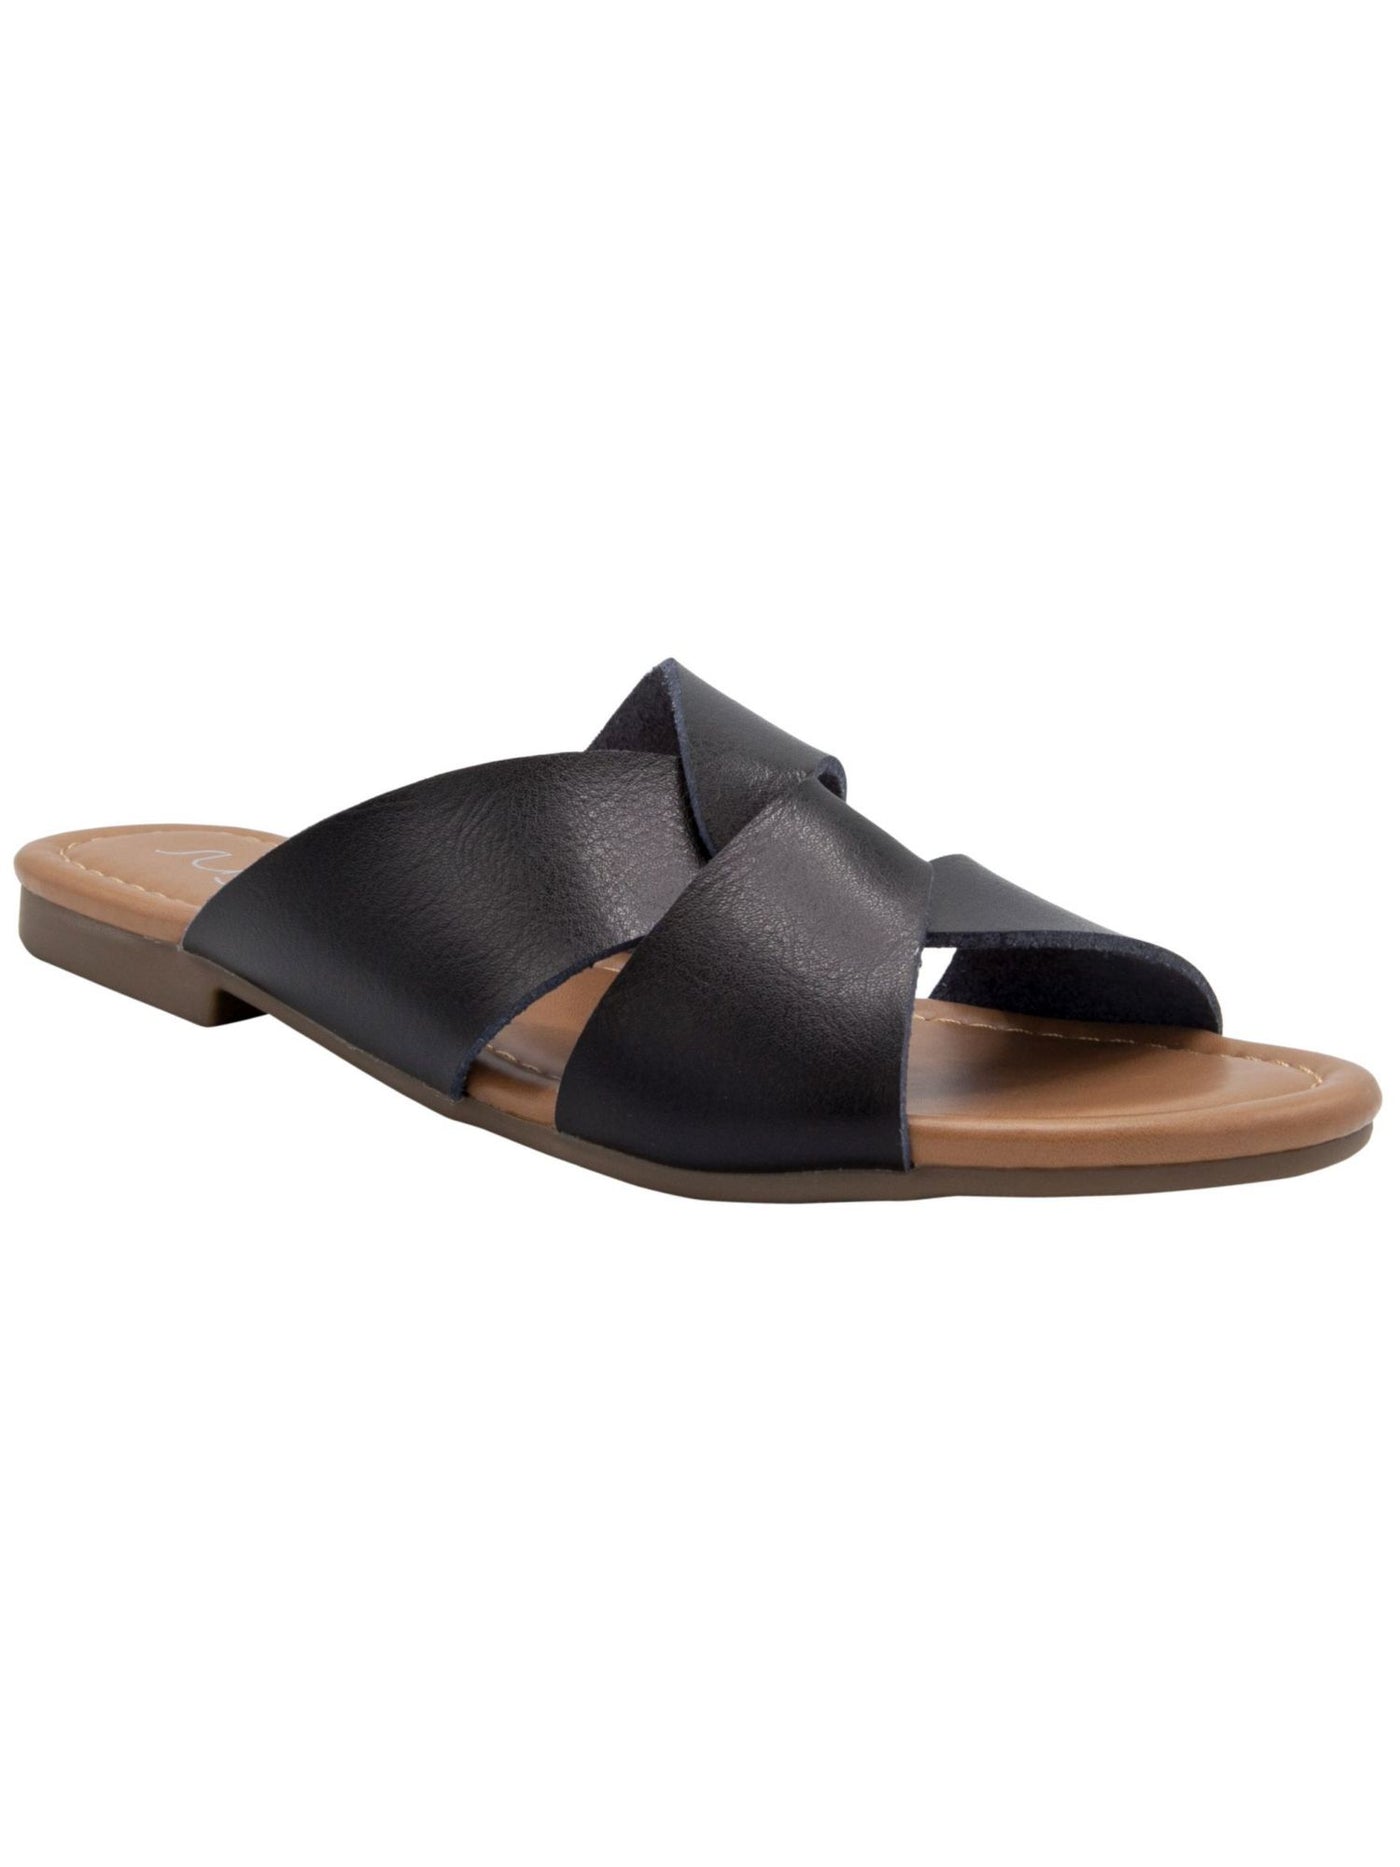 SUGAR Womens Black Knotted Design Comfort Woven Olena Round Toe Block Heel Slip On Slide Sandals Shoes 7.5 M